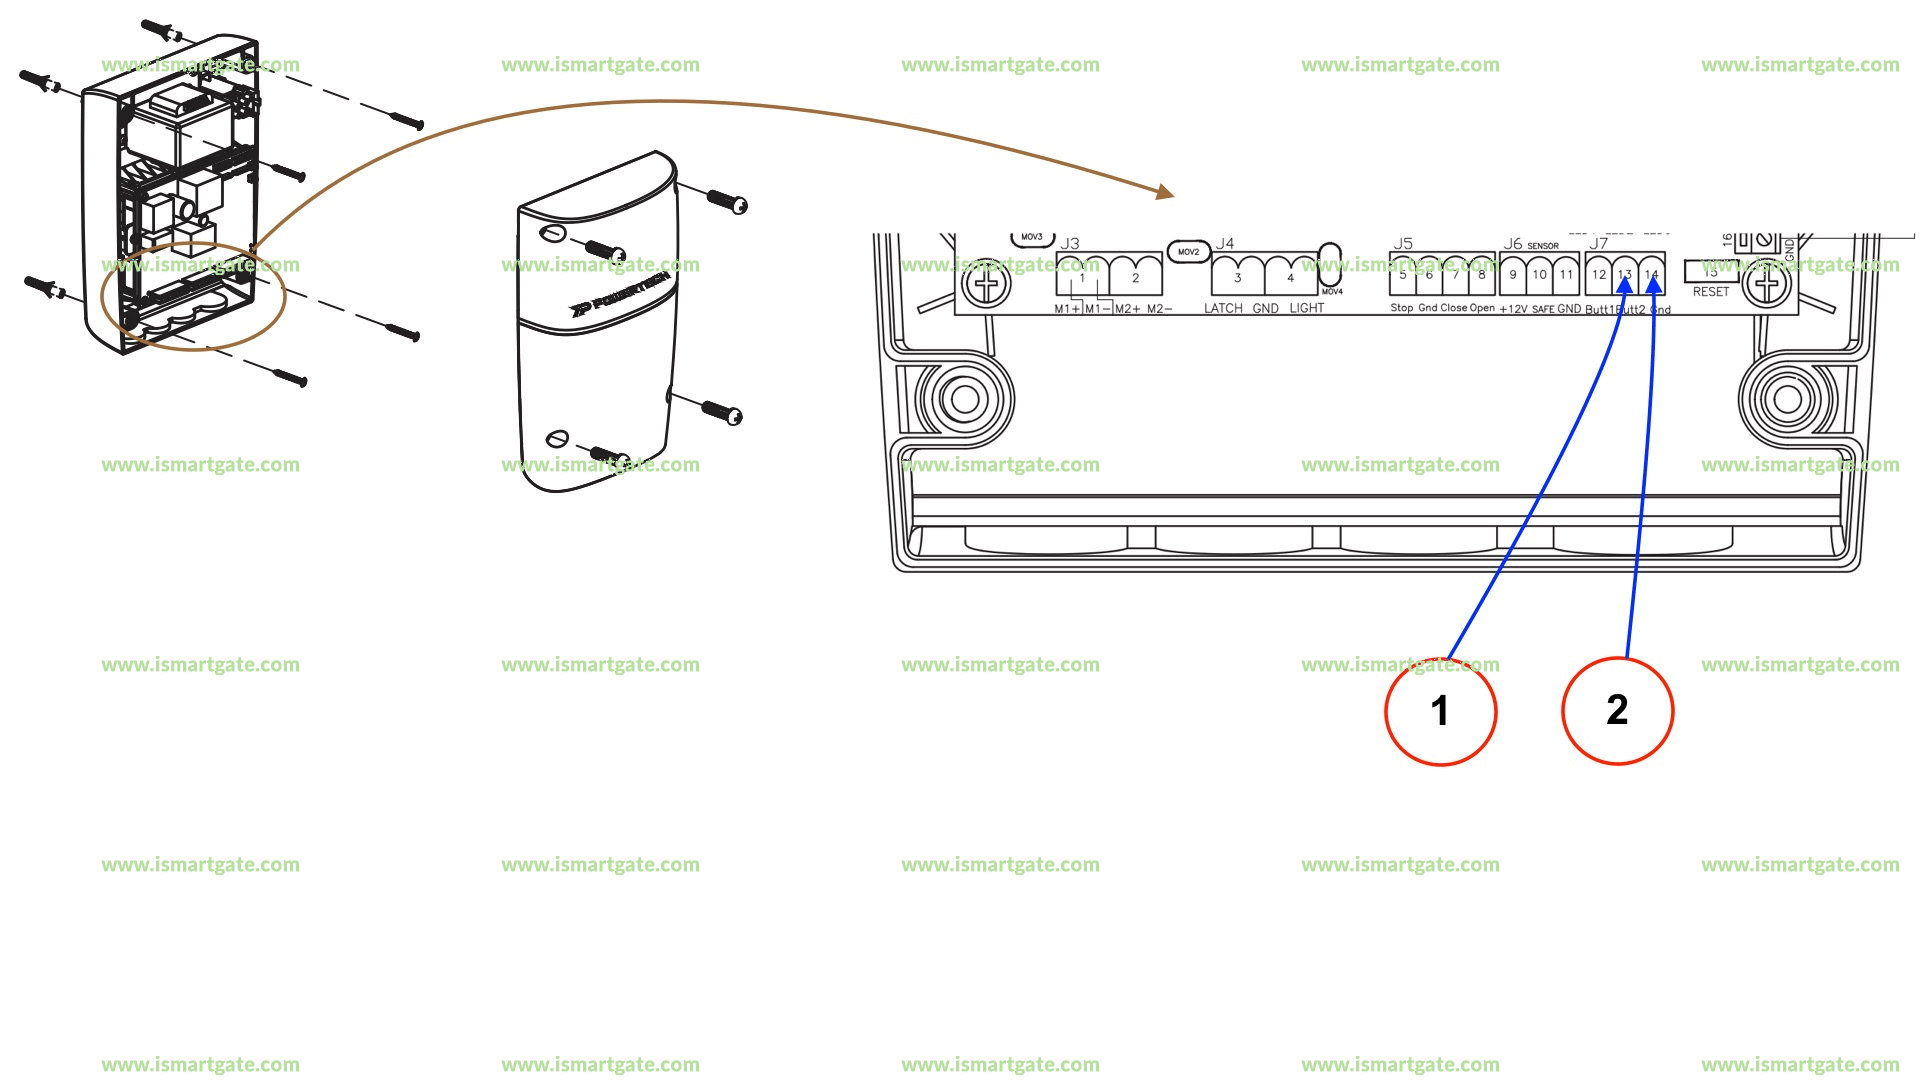 Wiring diagram for MERIK 200M